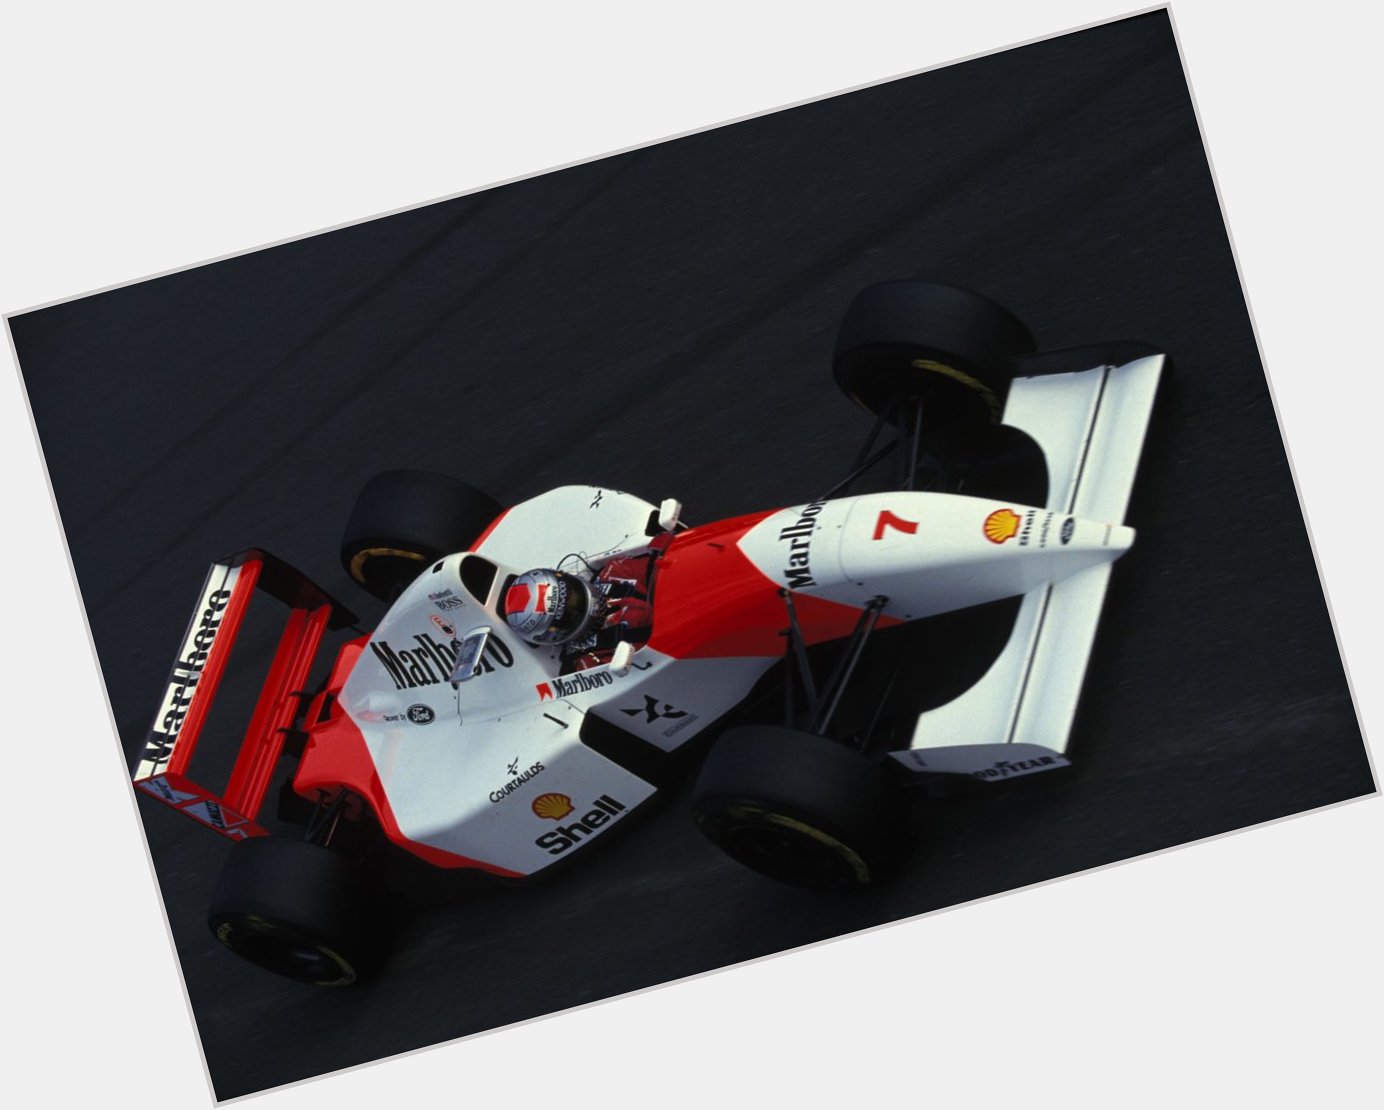 Wishing Michael Andretti a very happy birthday. A true racer! 